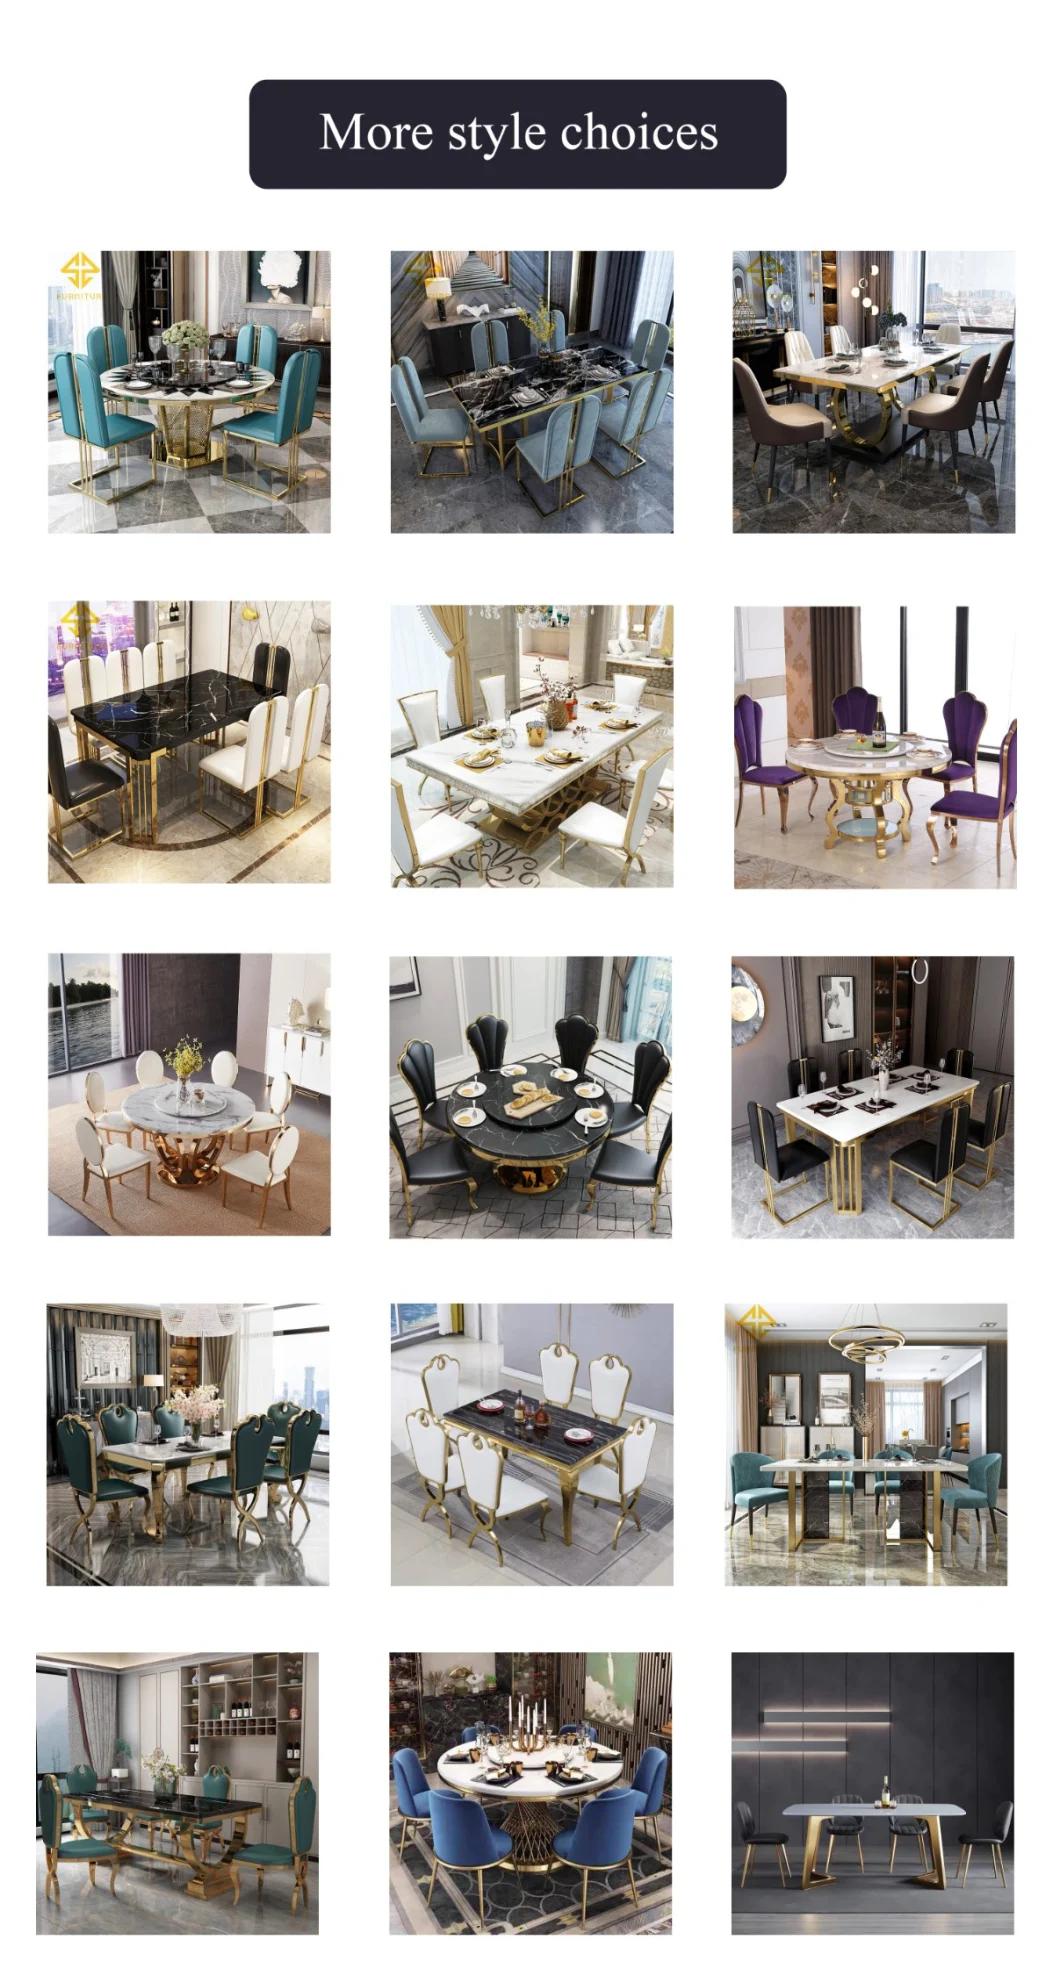 Modern Design Dining Room Furniture Stainless Steel Frame Black White Marble Slate Dining Table